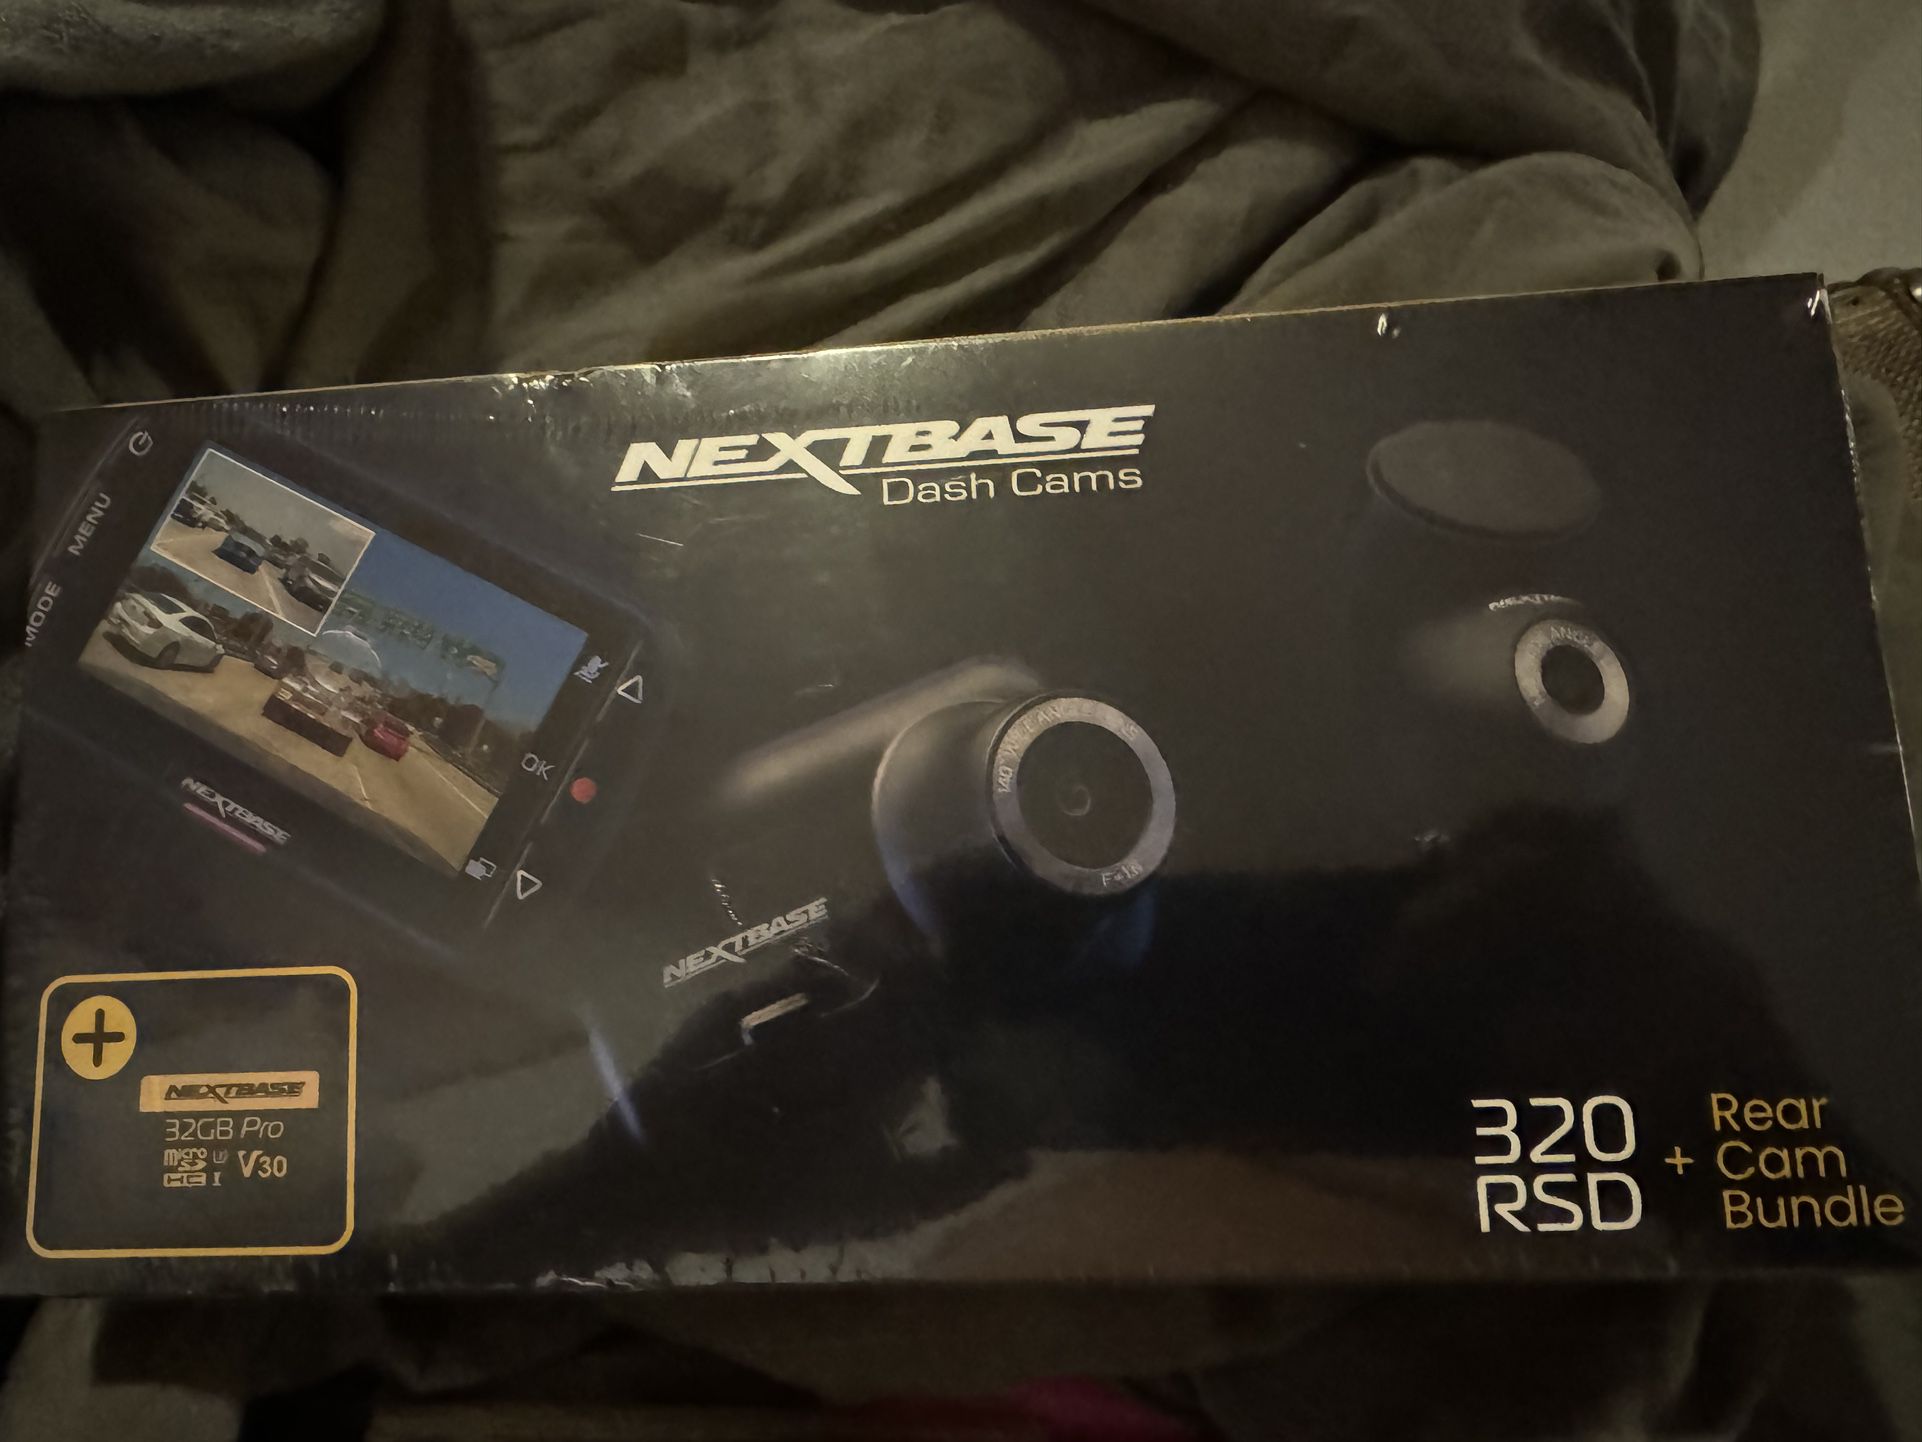 New Nextbase 320RSD $150